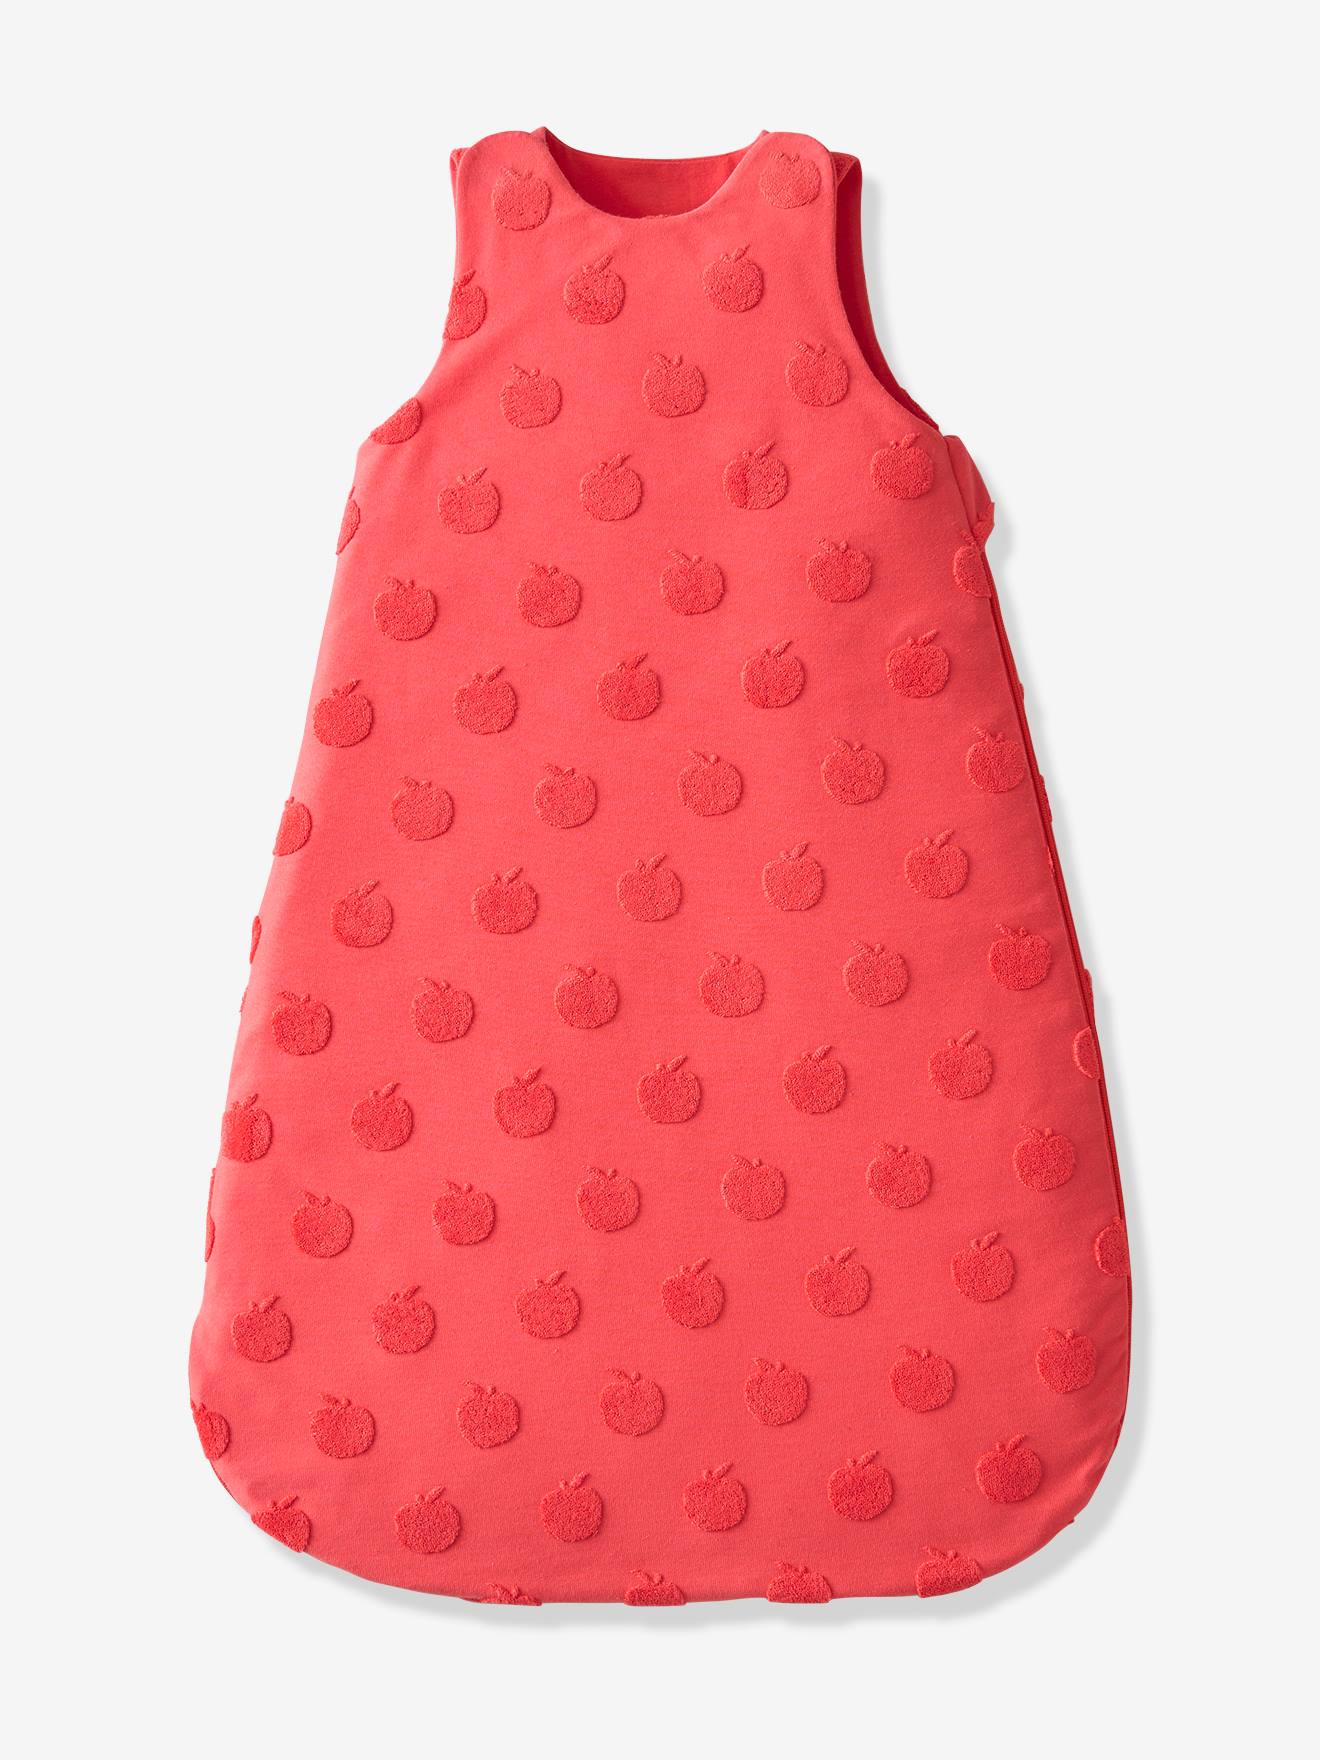 magneet Wonen regeling Baby Sleeping Bag in Towelling, Summer Special - strawberry, Bedding & Decor